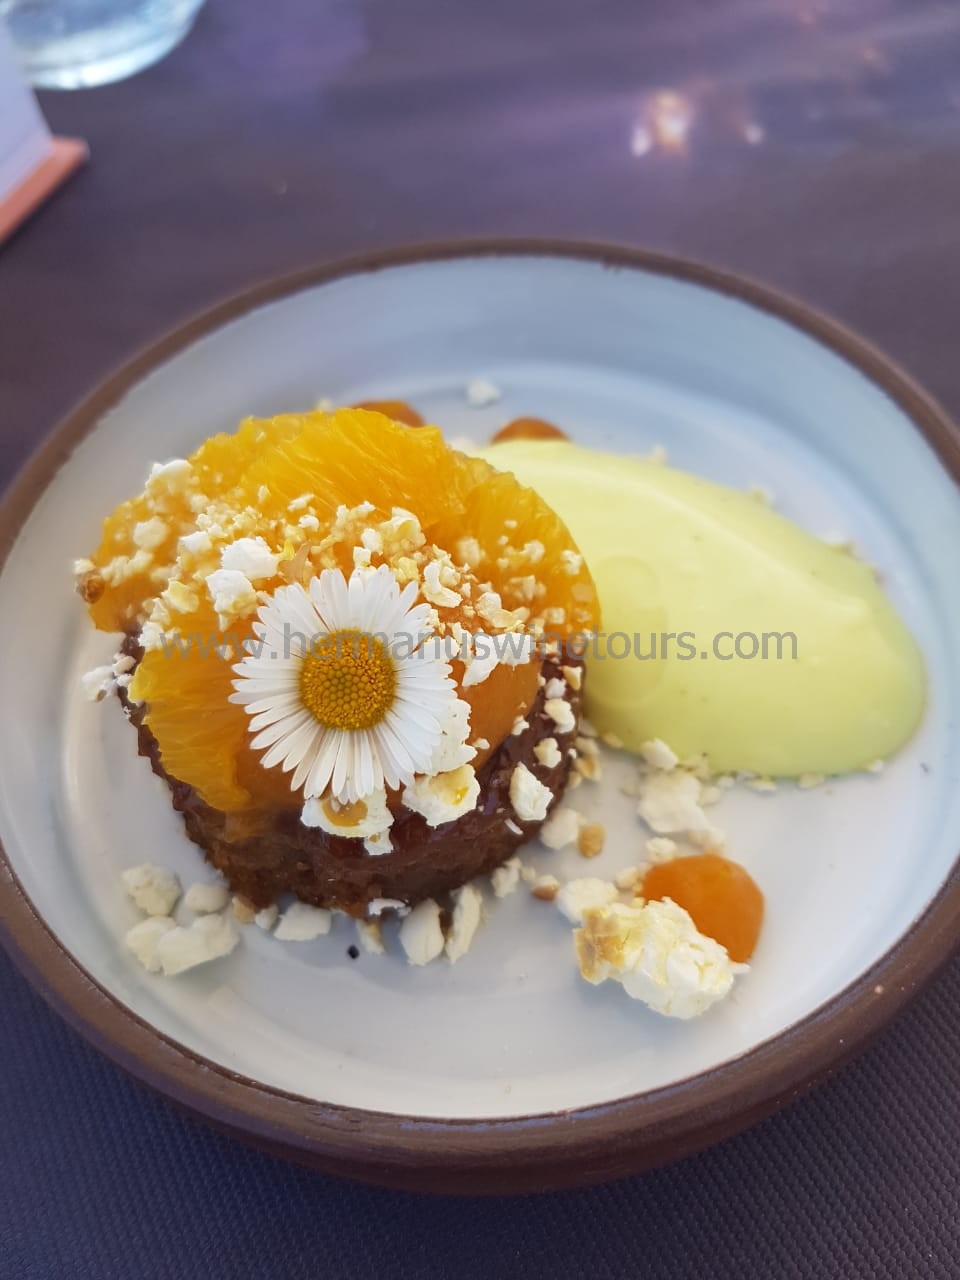 Malva orange pudding with popcorn, Hermanus restaurant, near Cape Town, South Africa